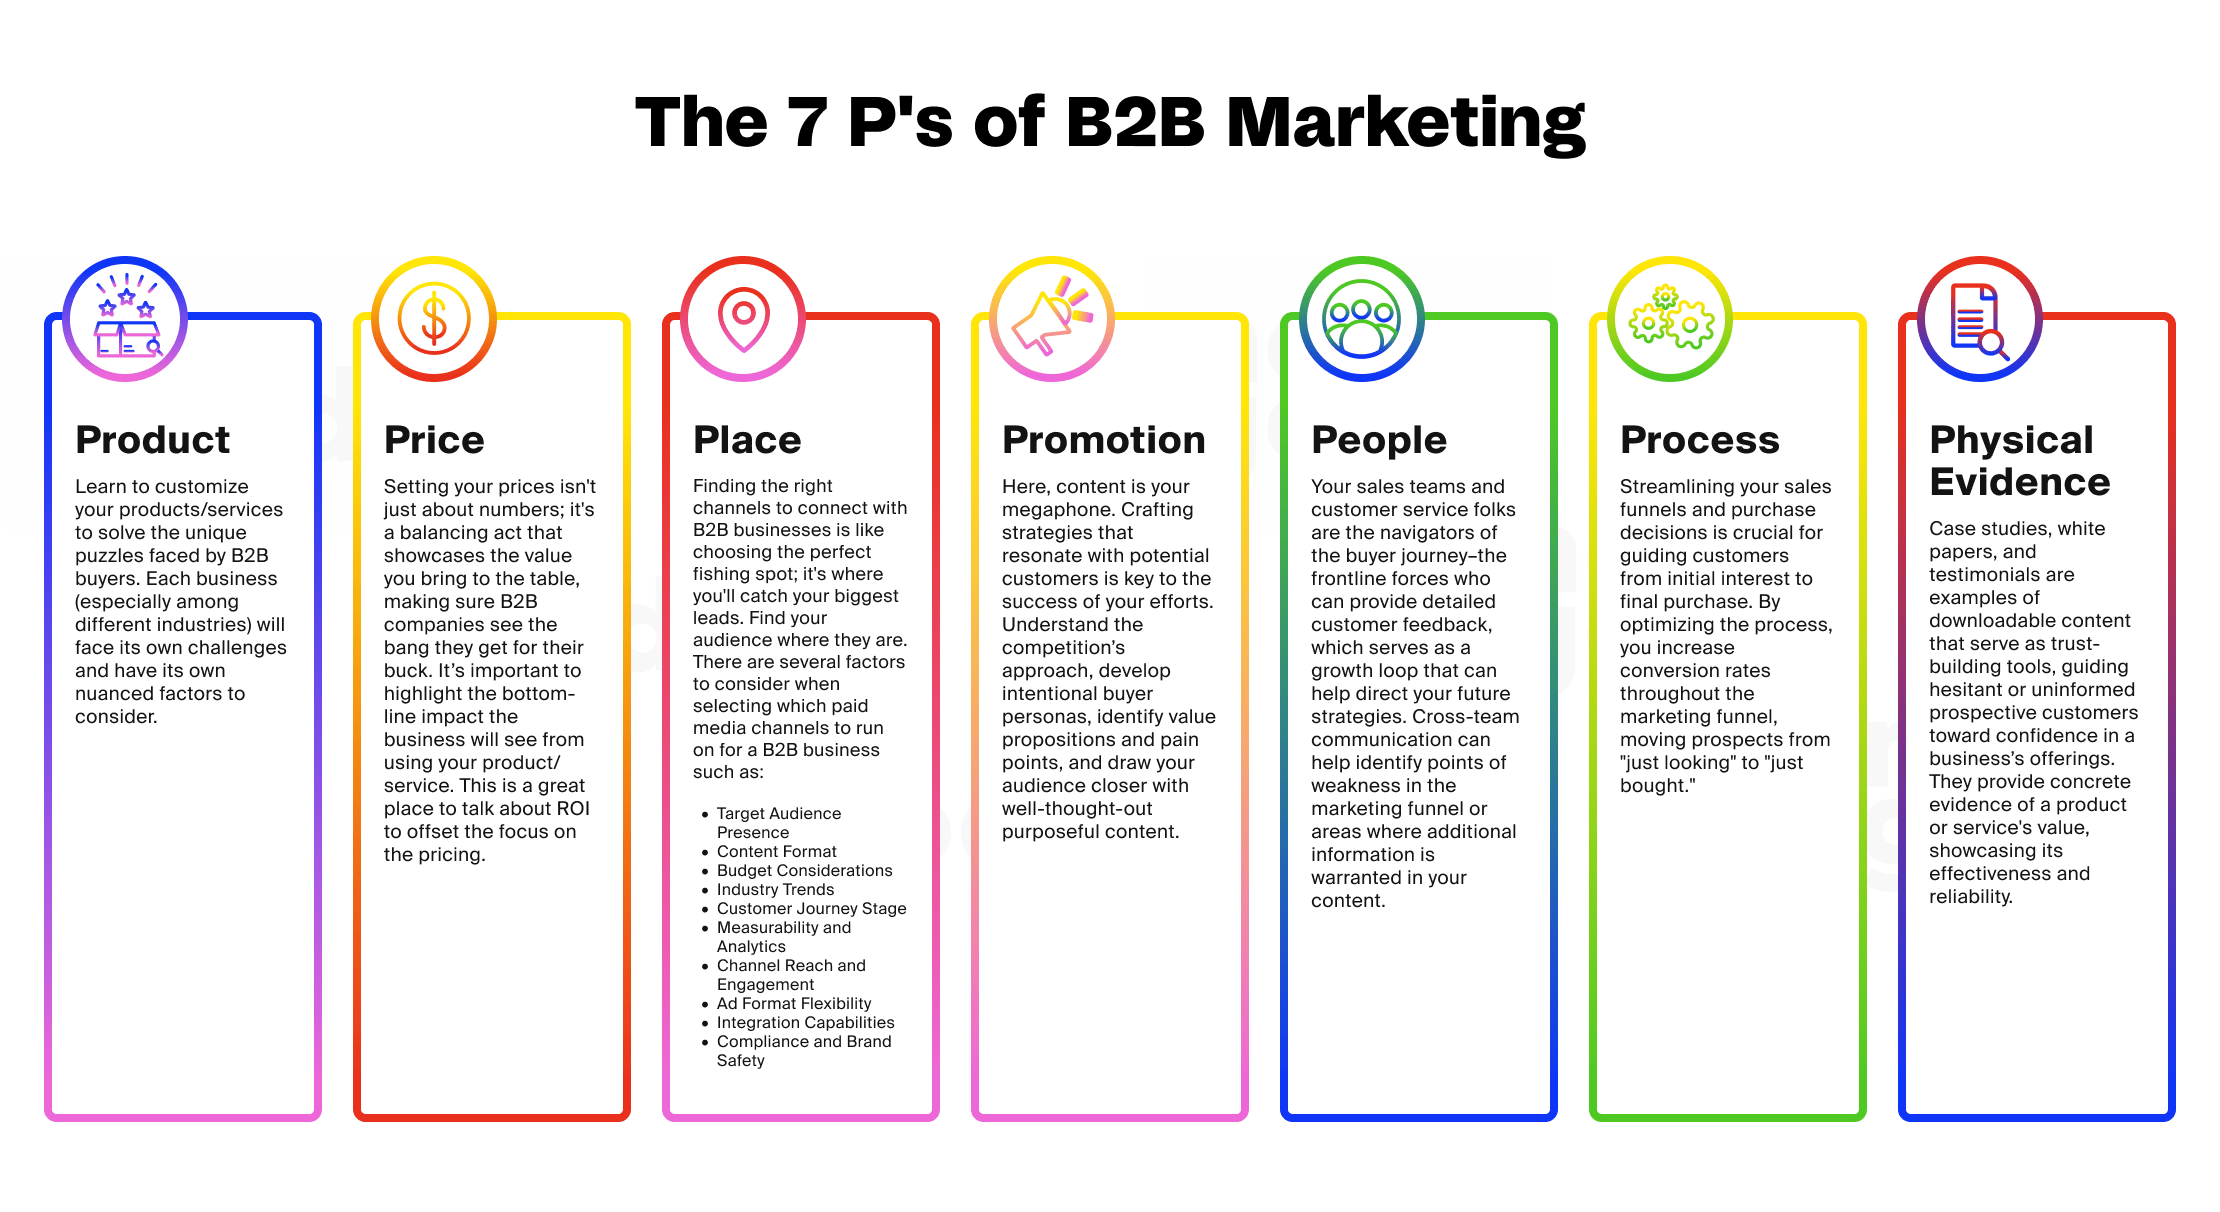 The 7 P's of B2B marketing